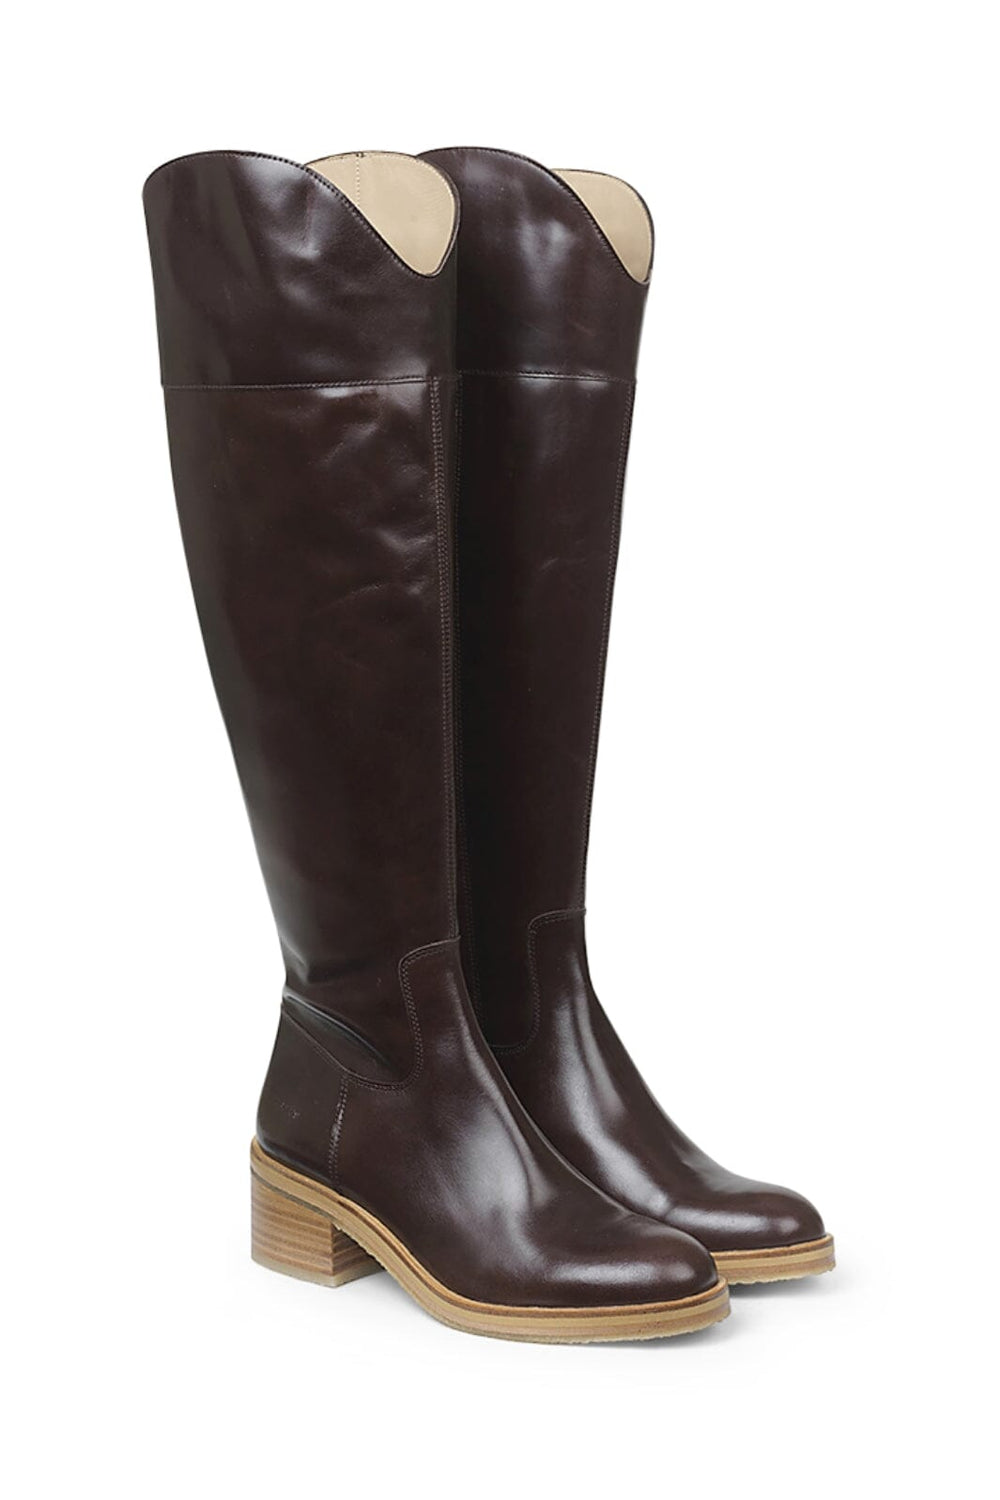 Angulus - High-leg boot with block heel and zipper - 1836 Dark Brown Støvler 